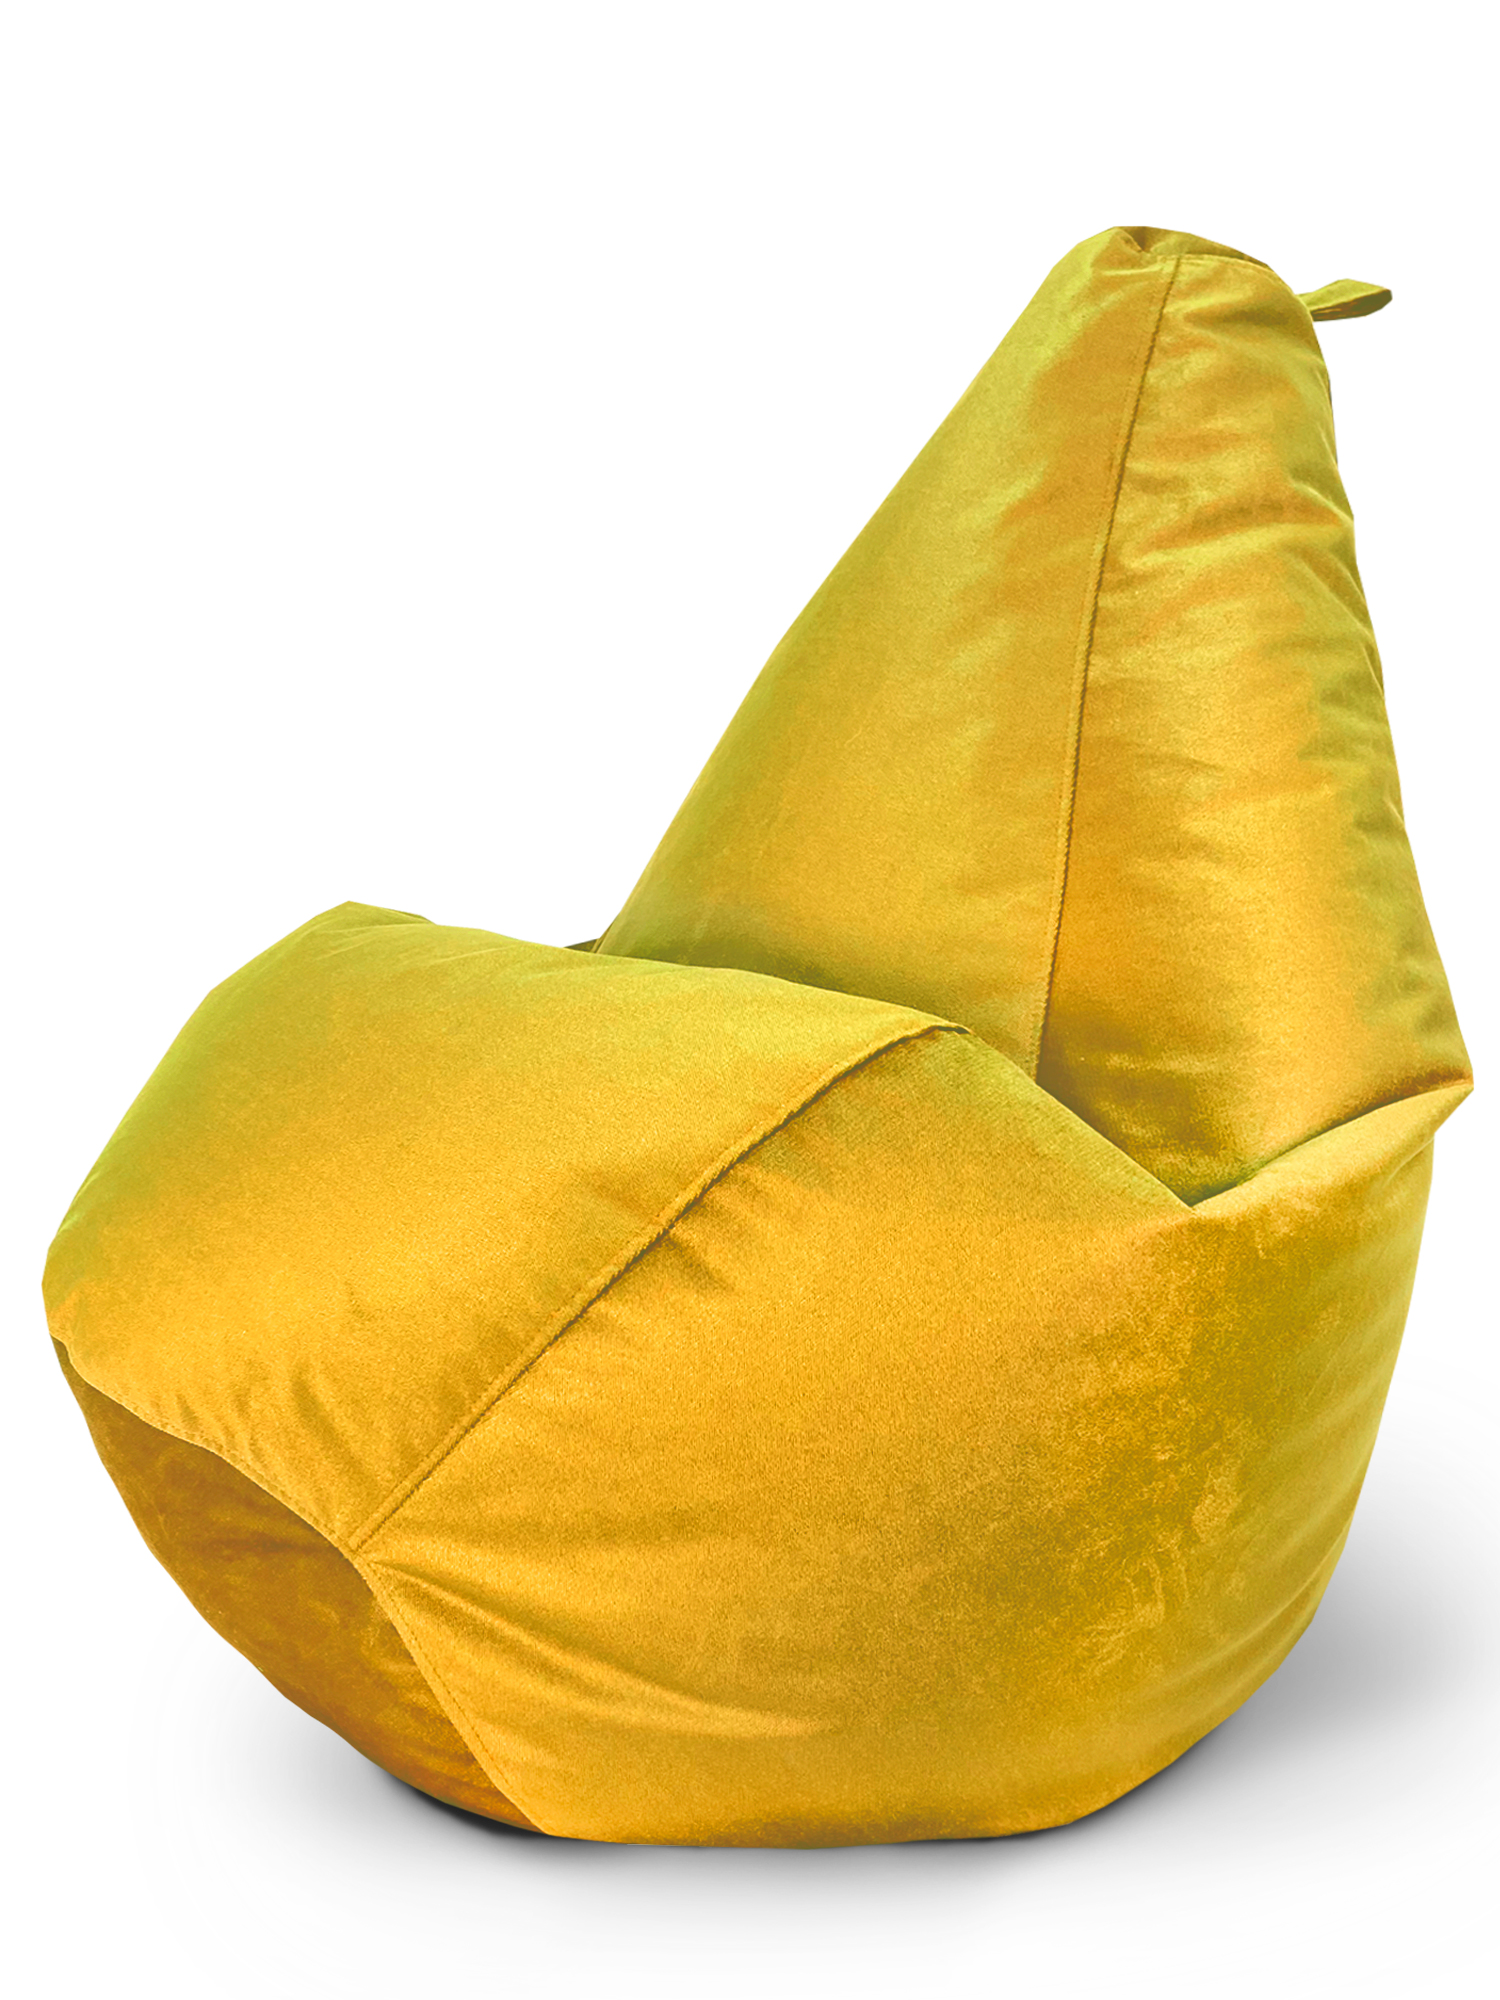 фото Кресло-мешок onpuff пуфик груша, размер хxxl, желтый велюр